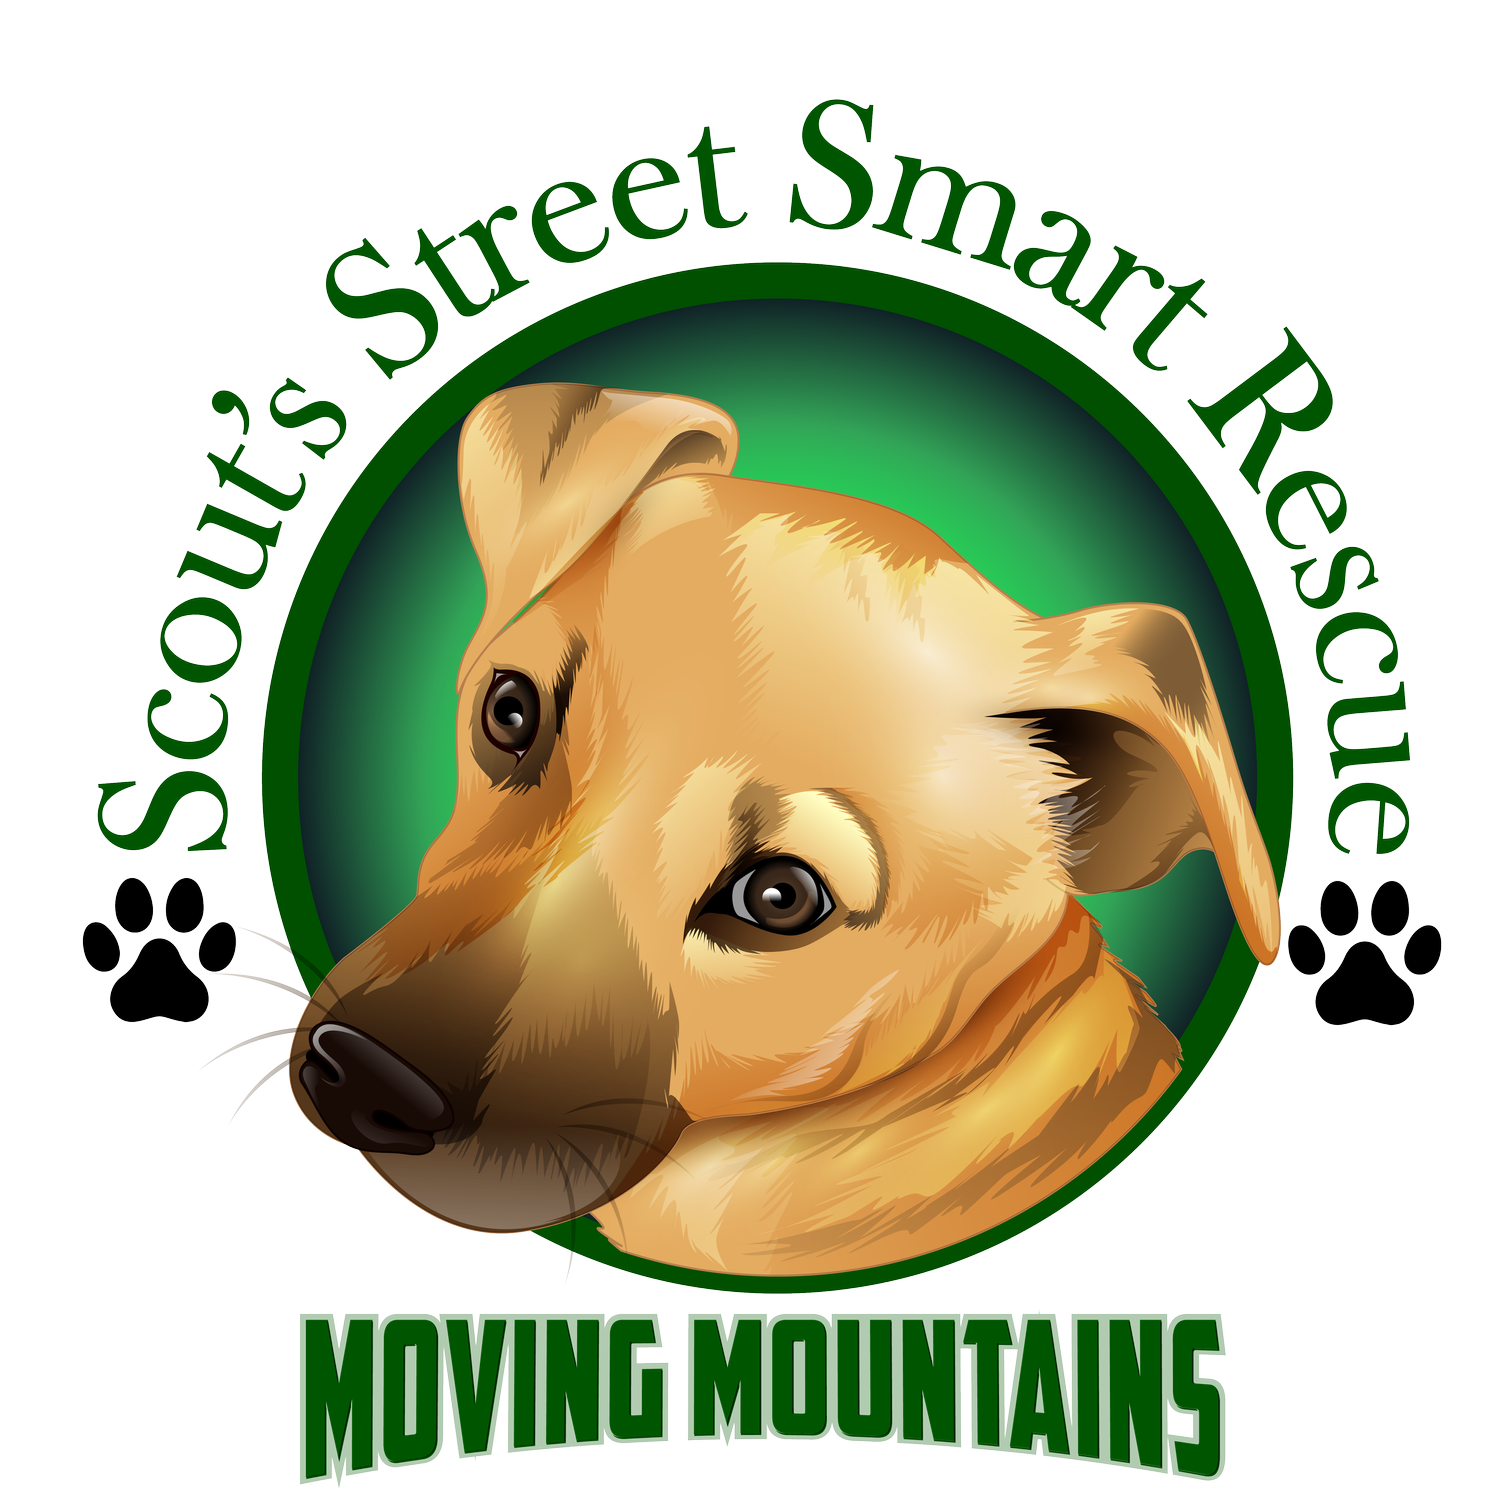 Scouts Street Smart Rescue